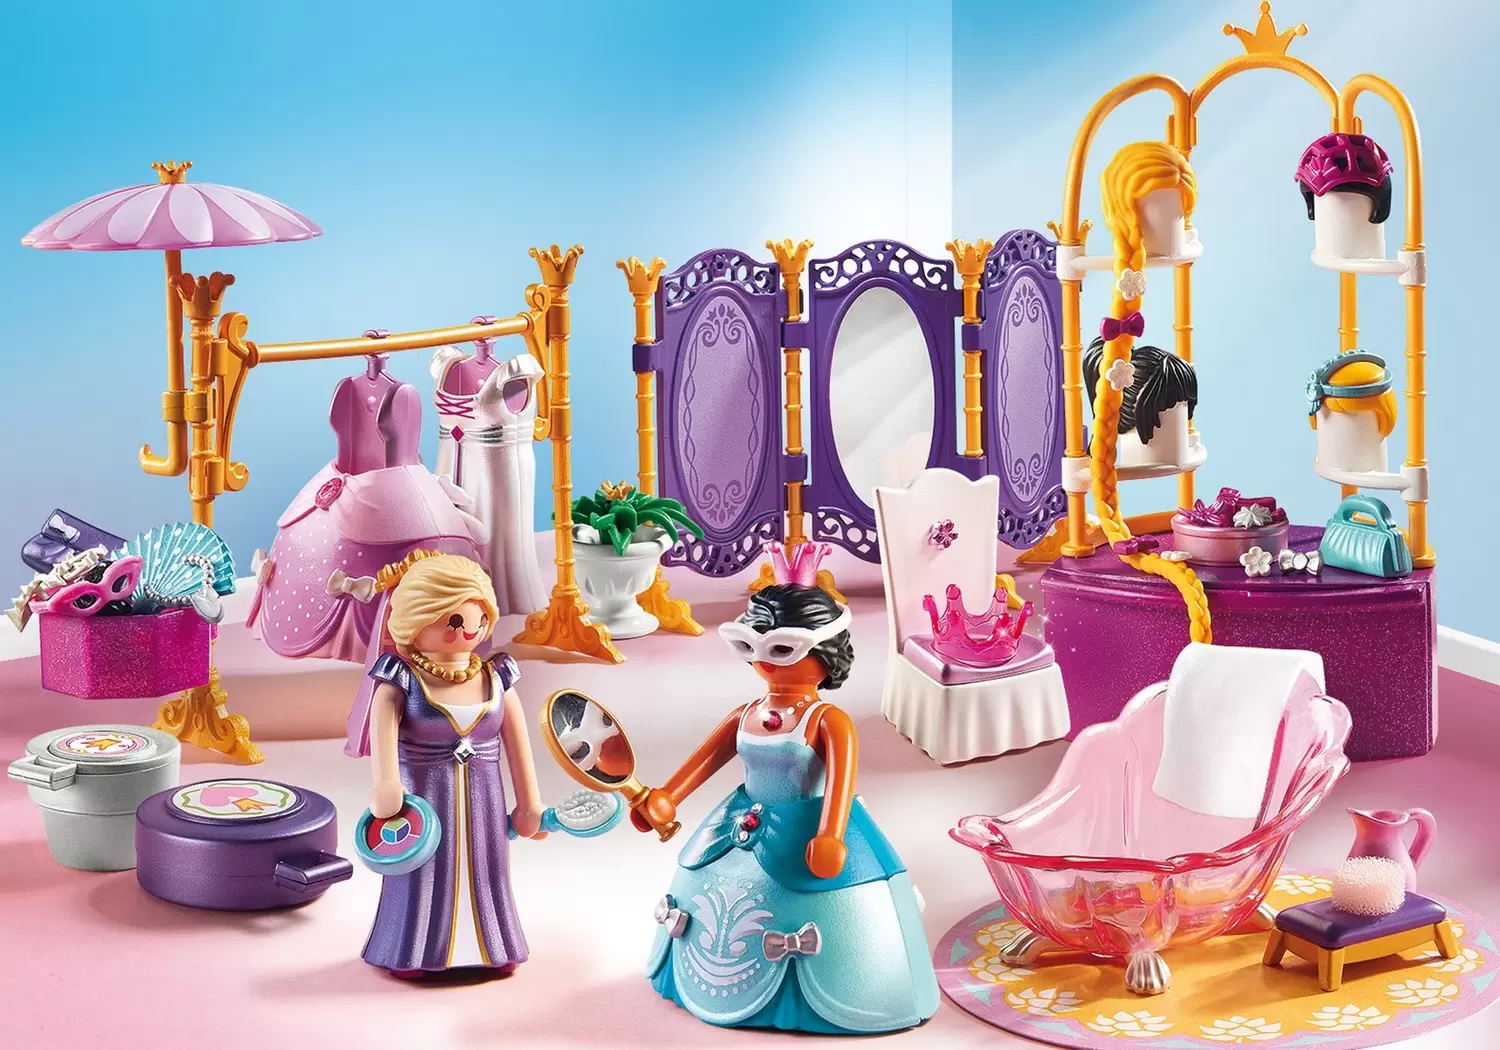 Playmobil Princess - Dressing Room with Salon